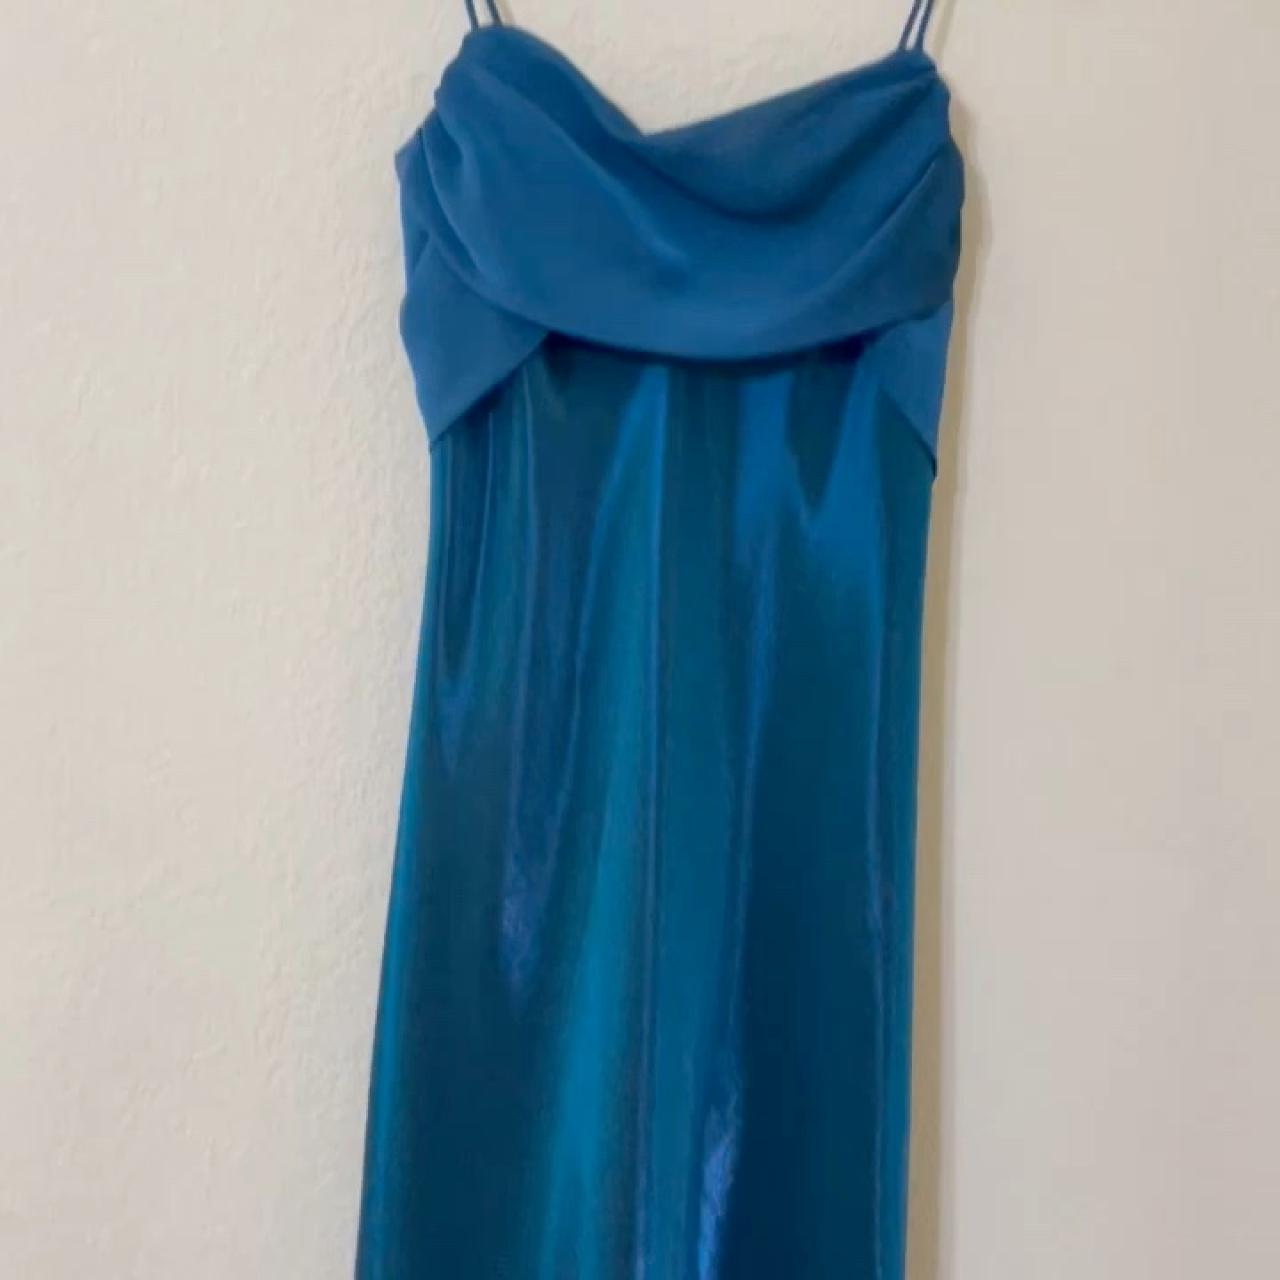 Y2K goth metallic teal blue gown vampy prom dress... - Depop